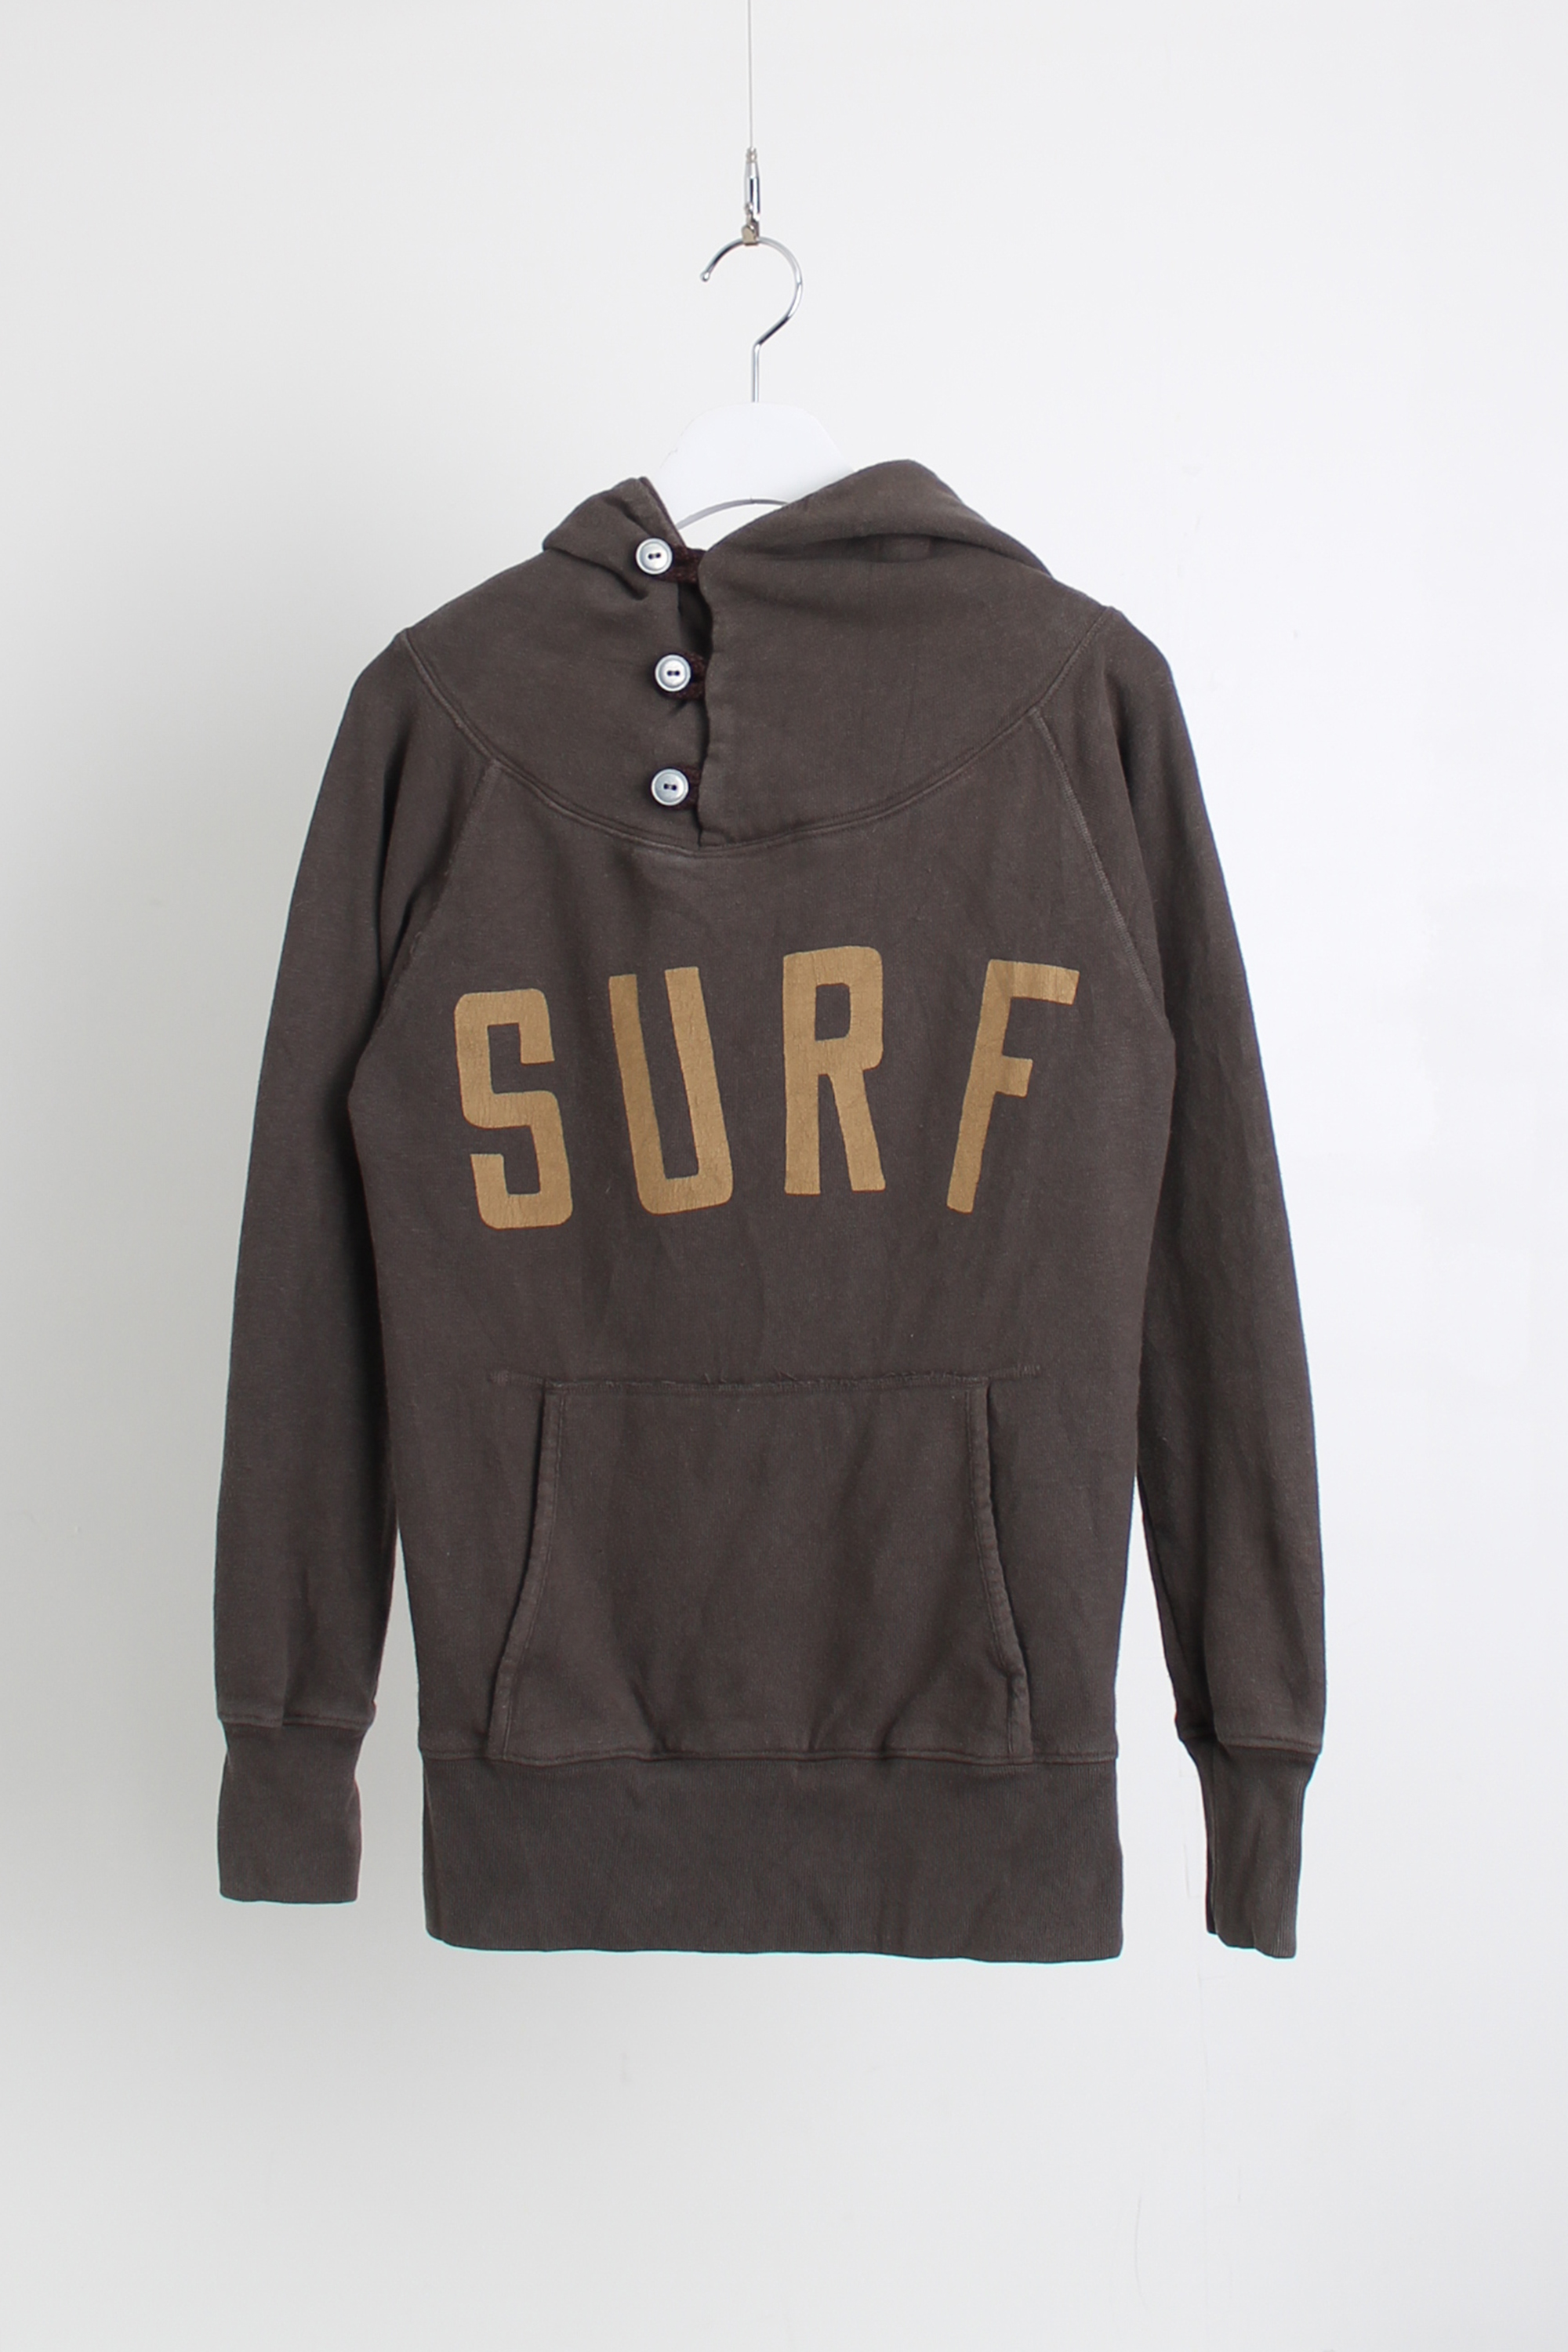 kapital surf hoodie